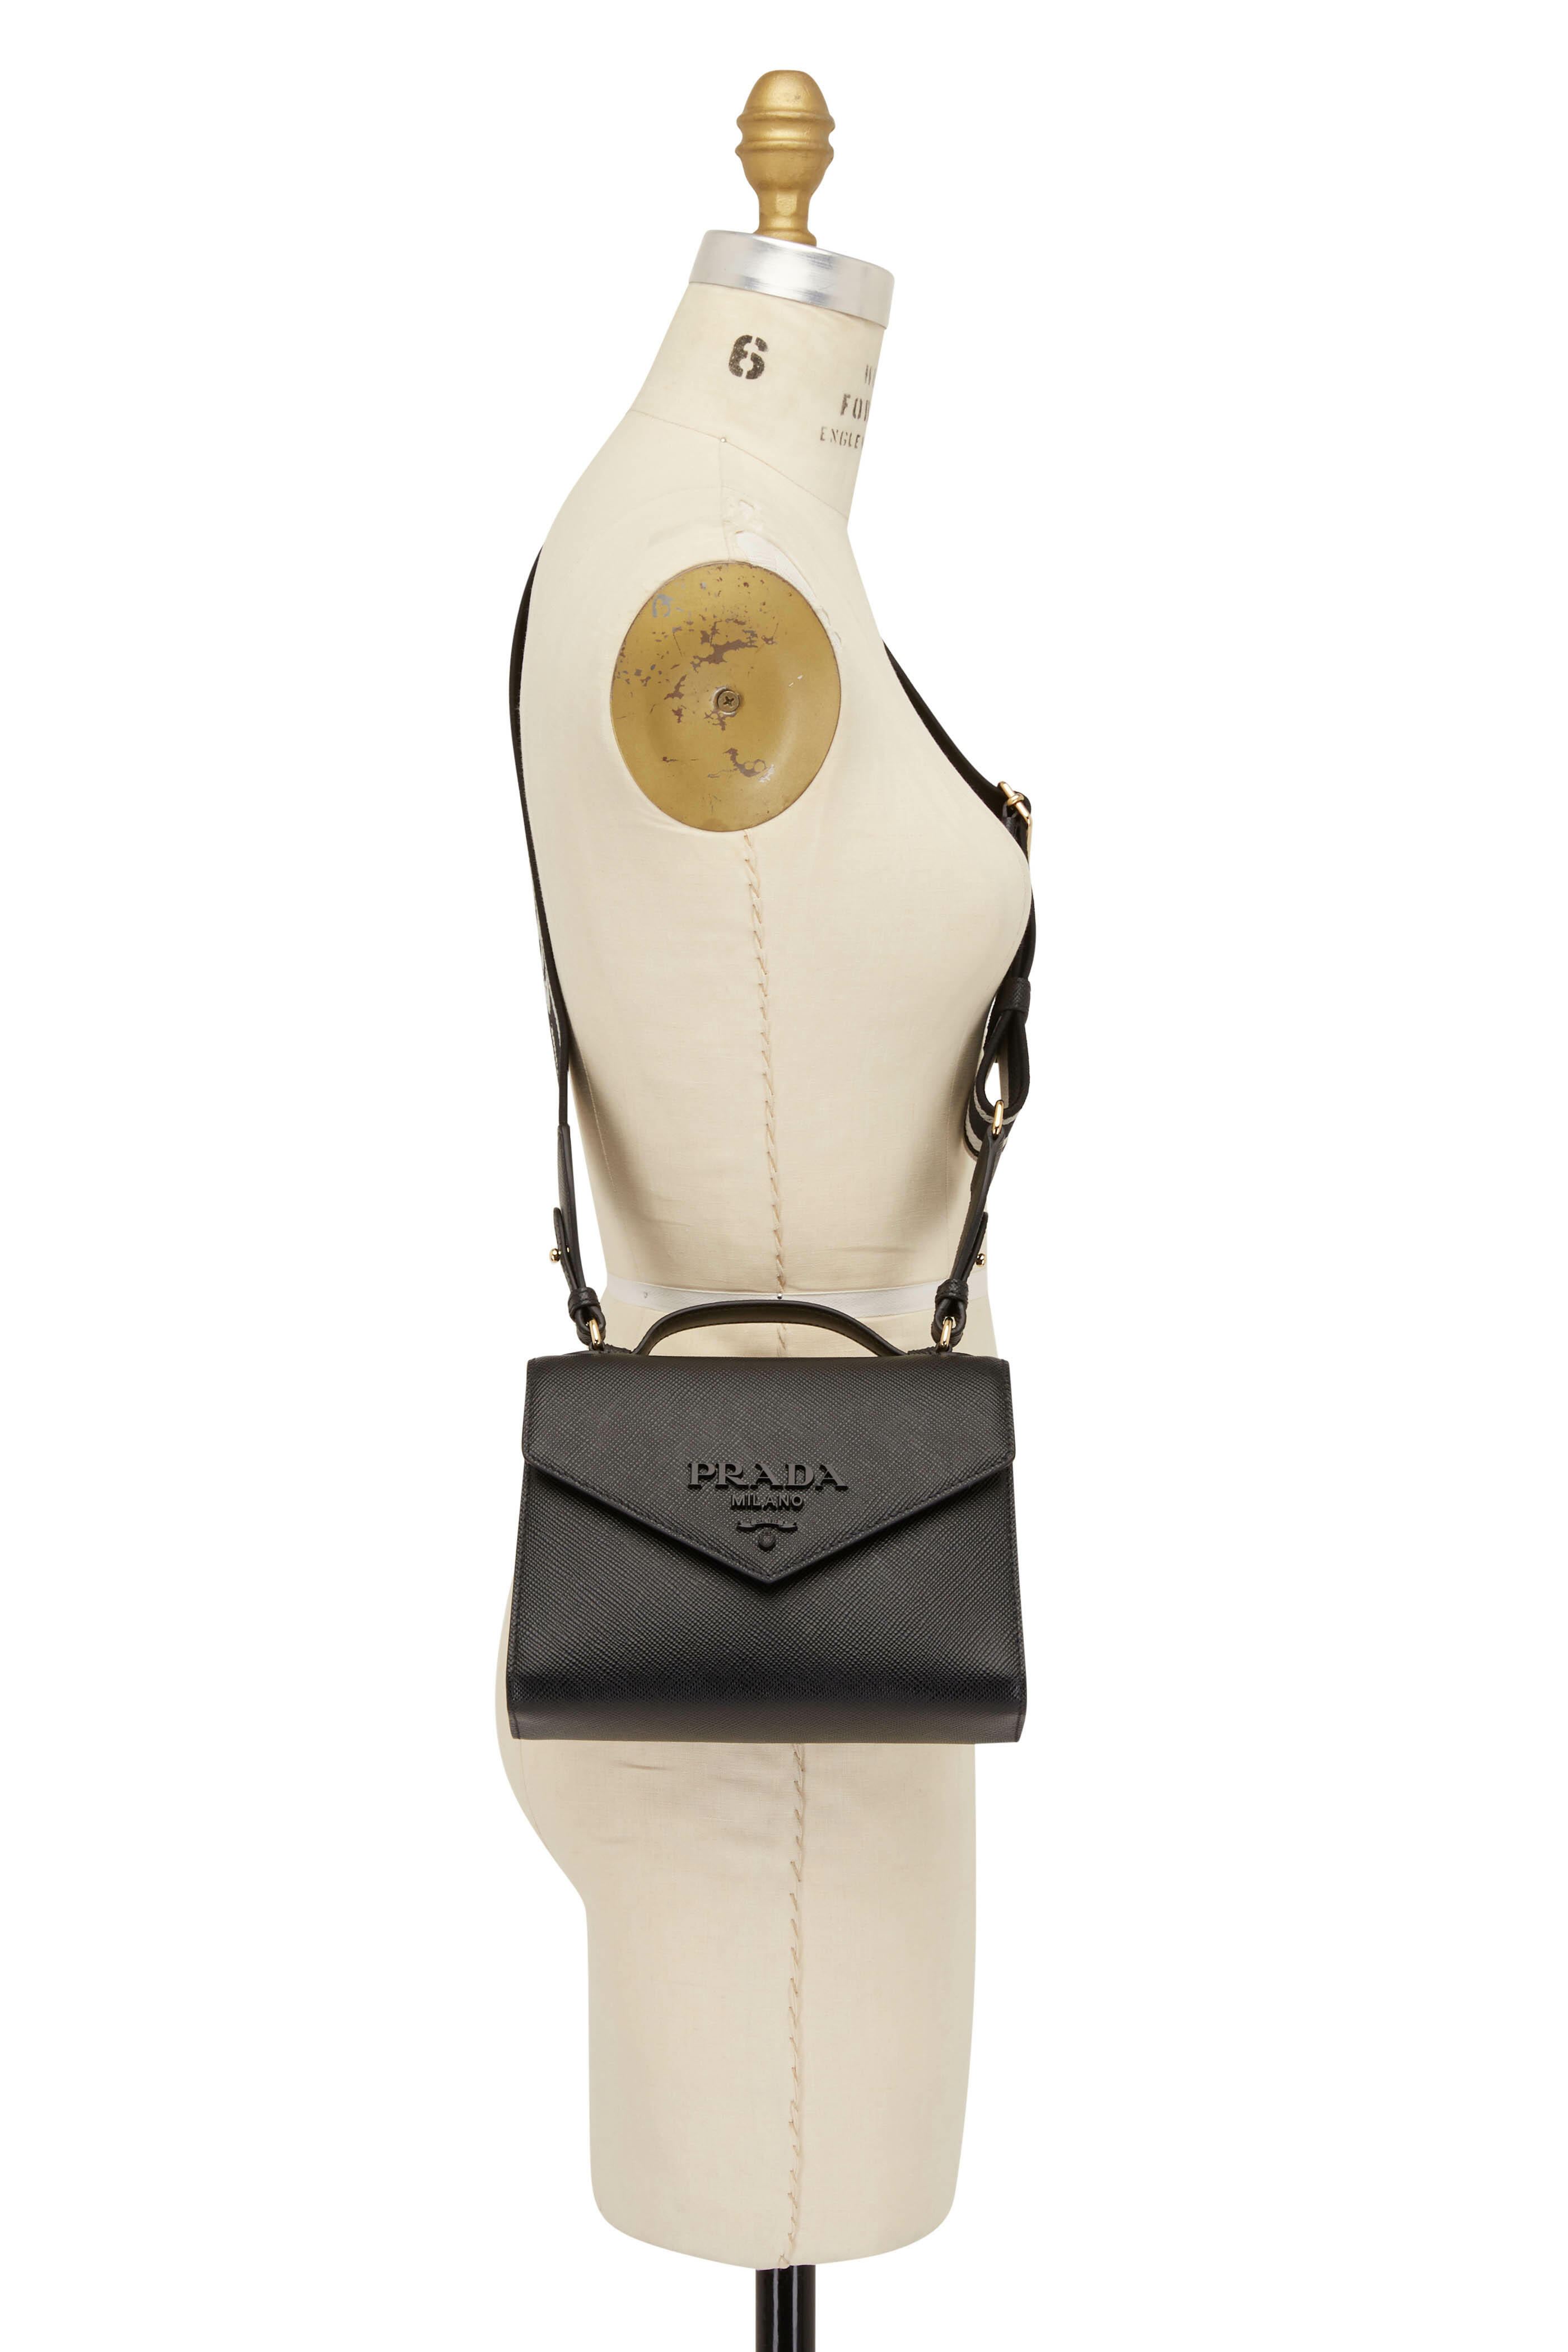 Prada Monochrome Saffiano and leather bag